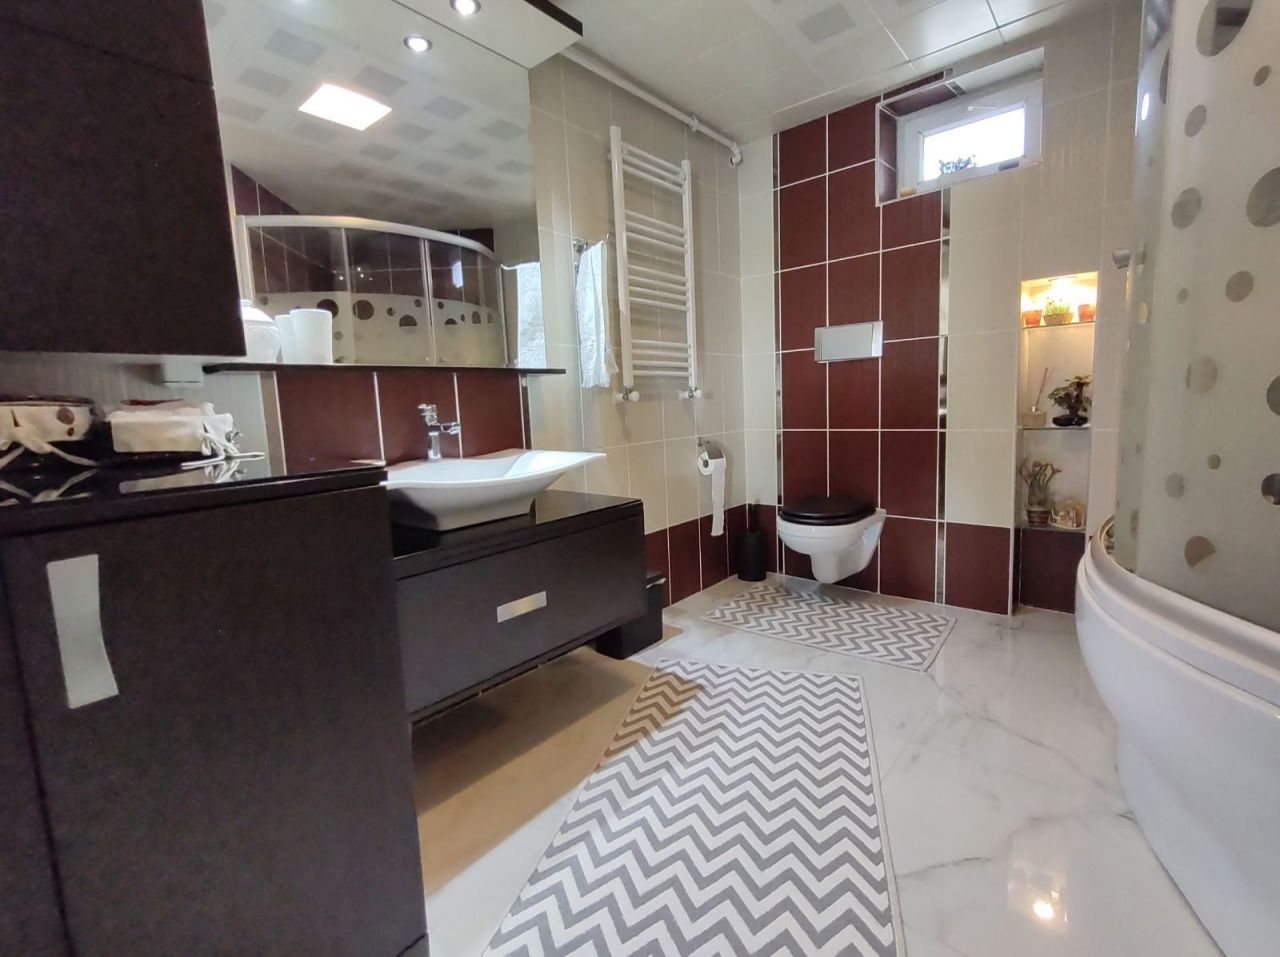 Apartment in Antalya, Turkey, 170 sq.m - picture 1